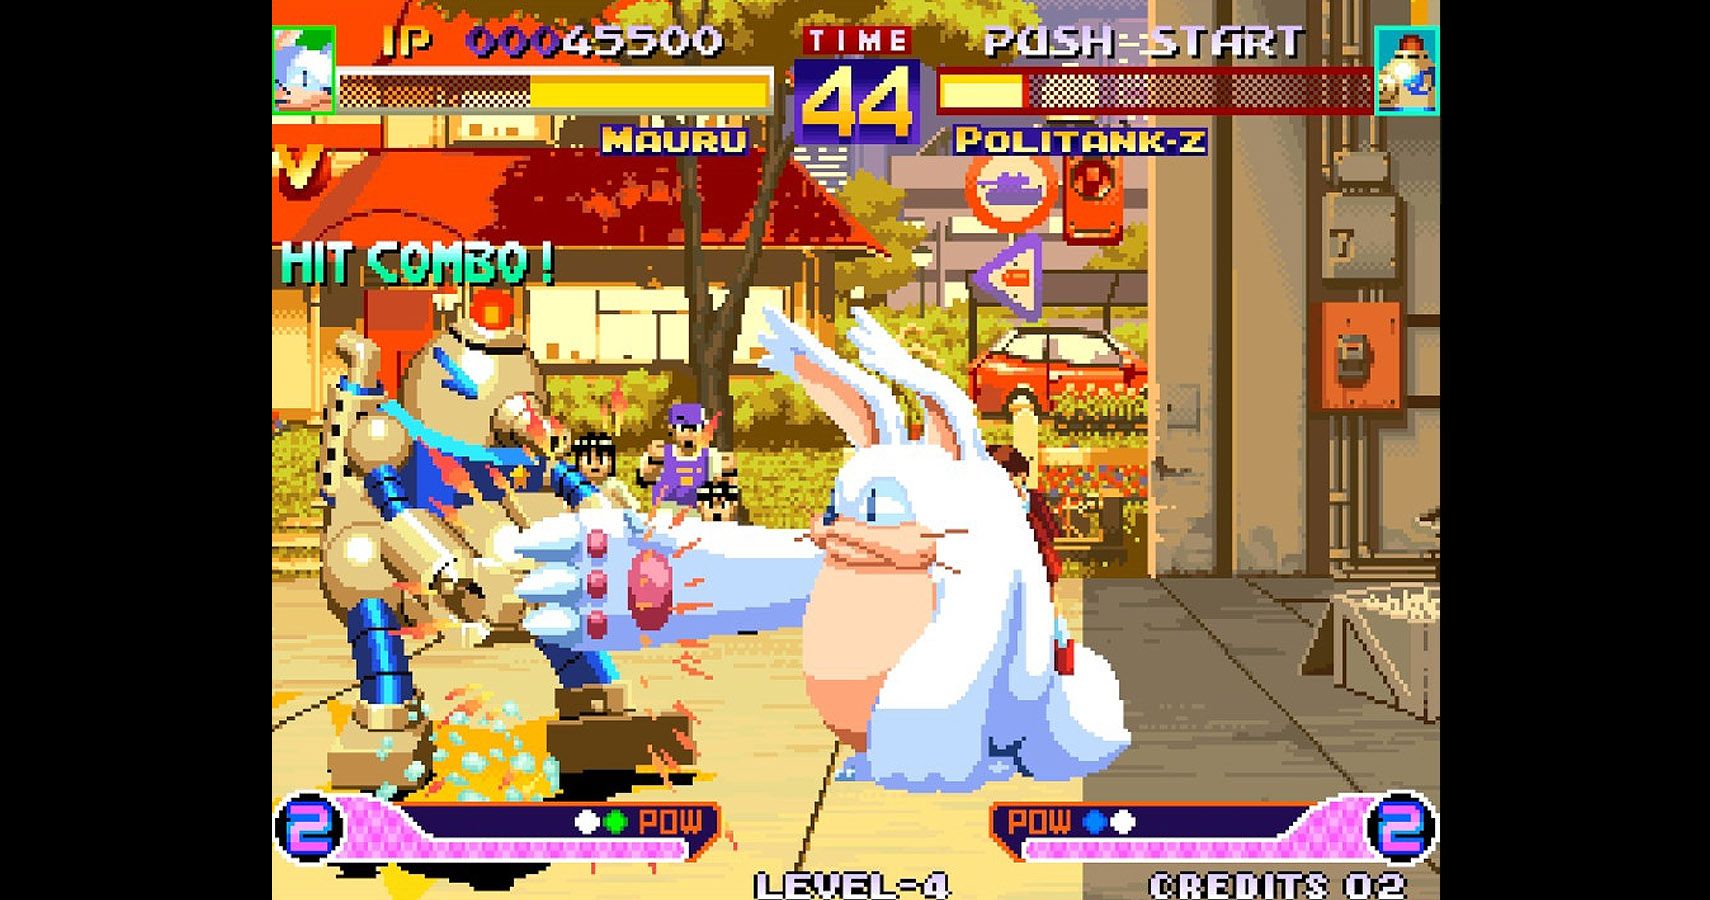 Politank-Z punches Mauru in a shopping center in Waku Waku 7.